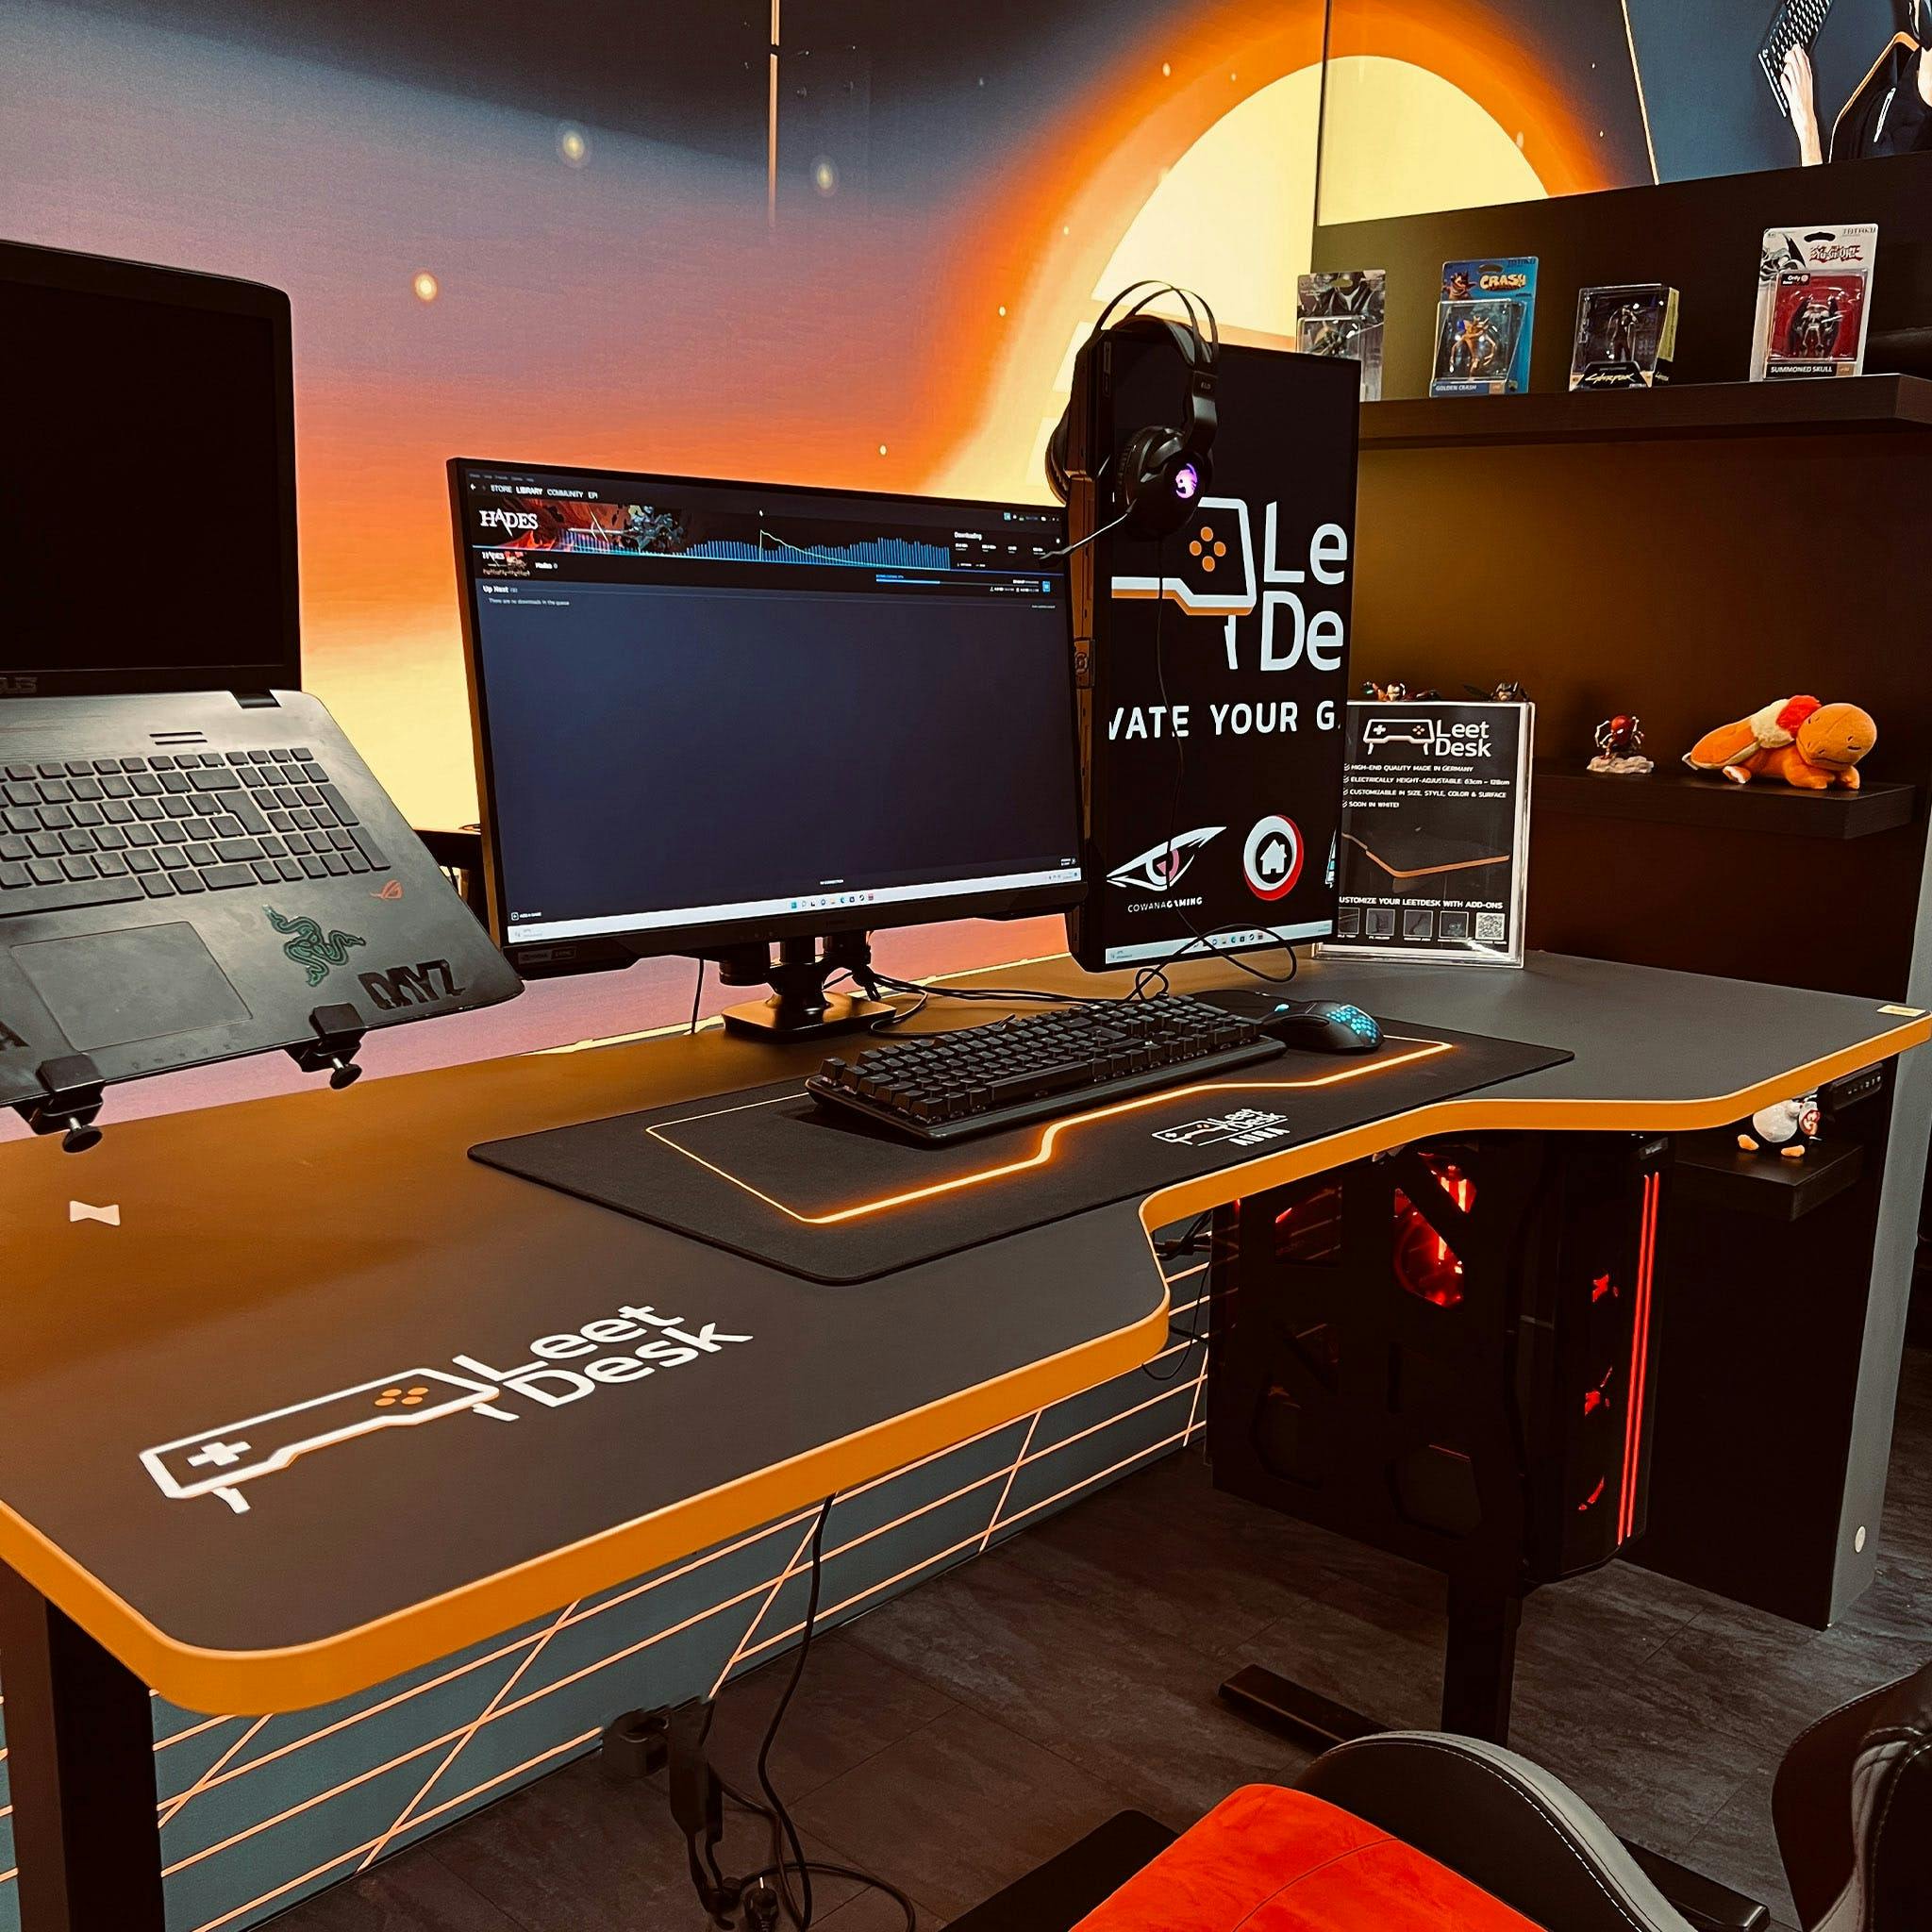 Gaming desks with 180 cm offer enough space for a large setup | Credit: LeetDesk